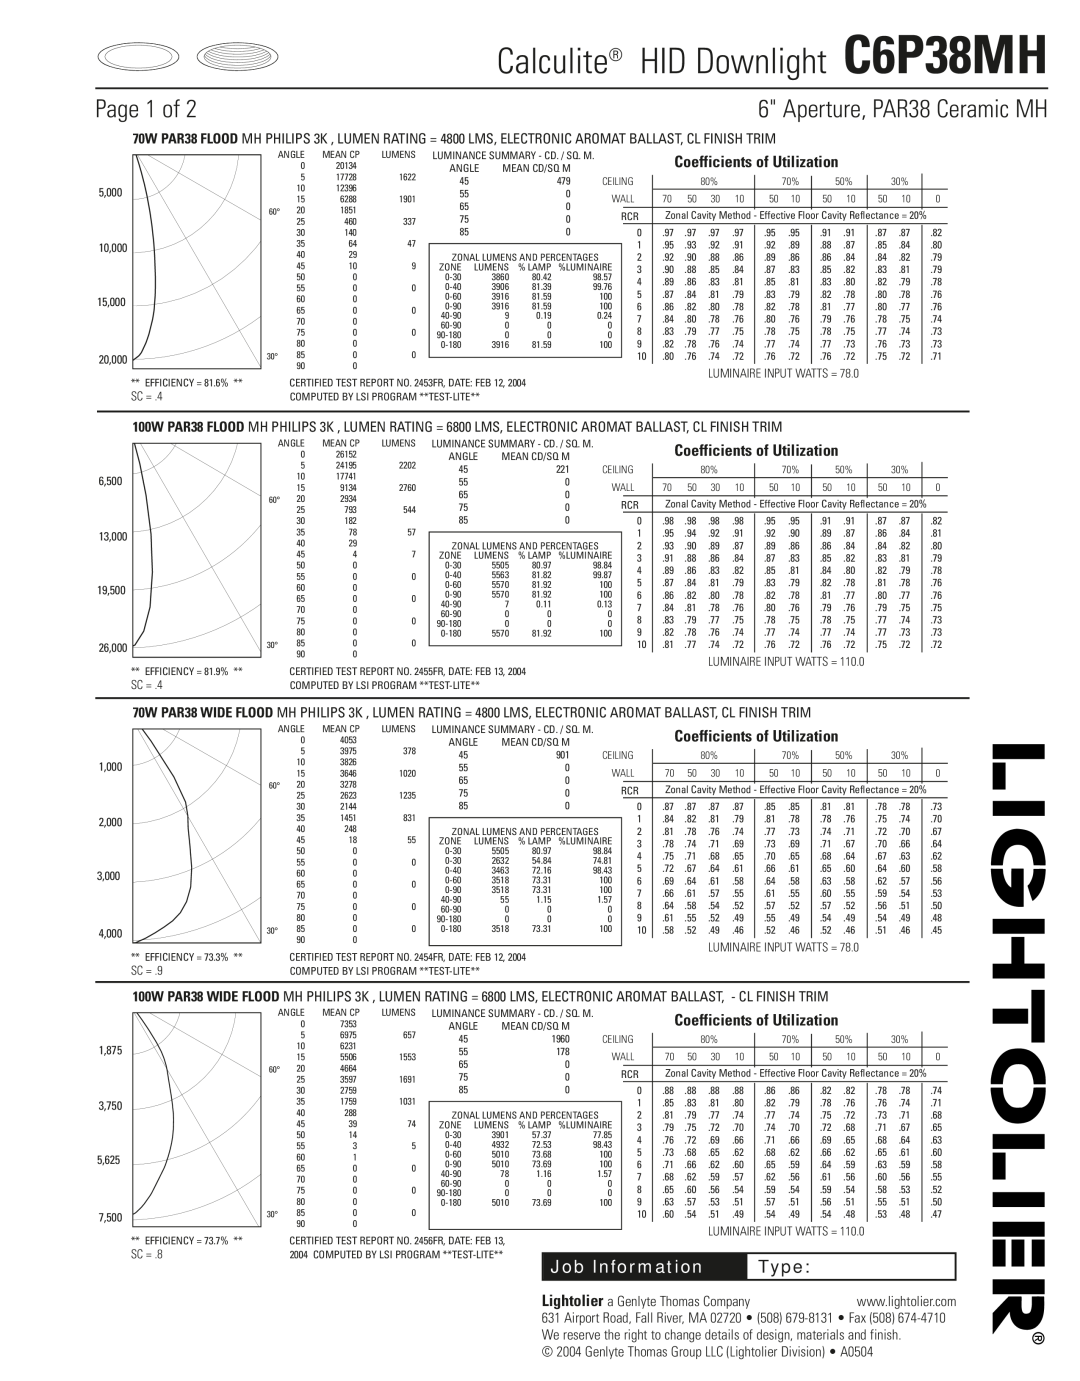 Lightolier Page 1 of 26 Aperture, PAR38 Ceramic MH, Calculite HID Downlight C6P38MH, Job Information, Type 